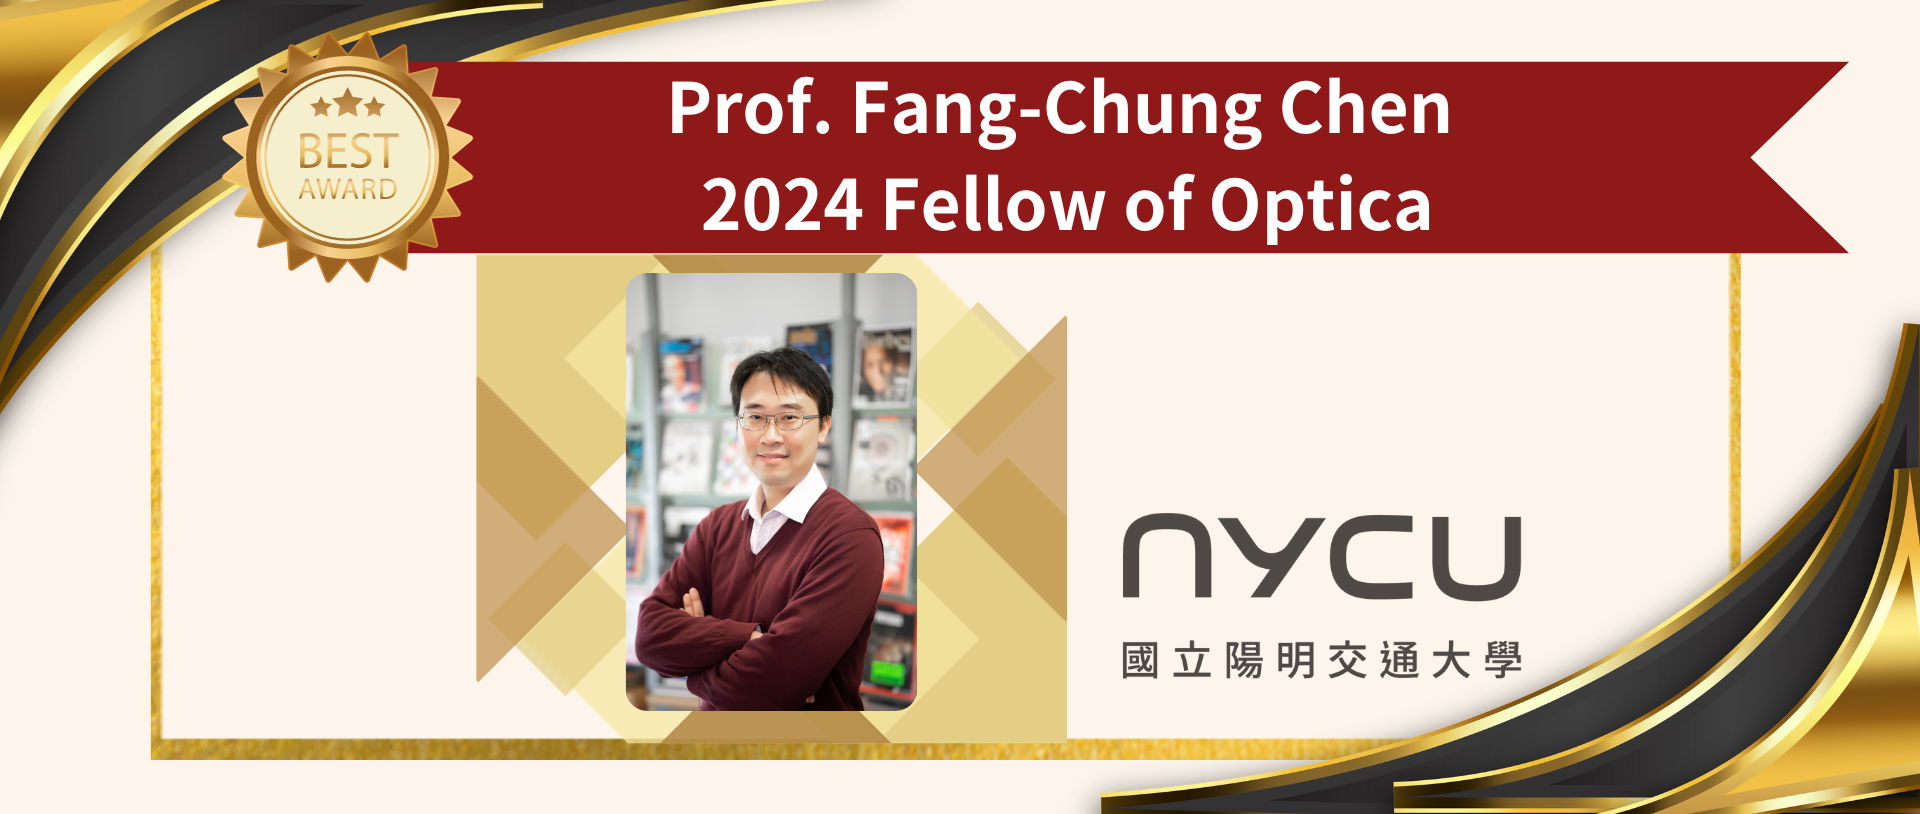 Congratulations!!Prof. Fang-Chung Chen Named 2024 Fellow of Optica!